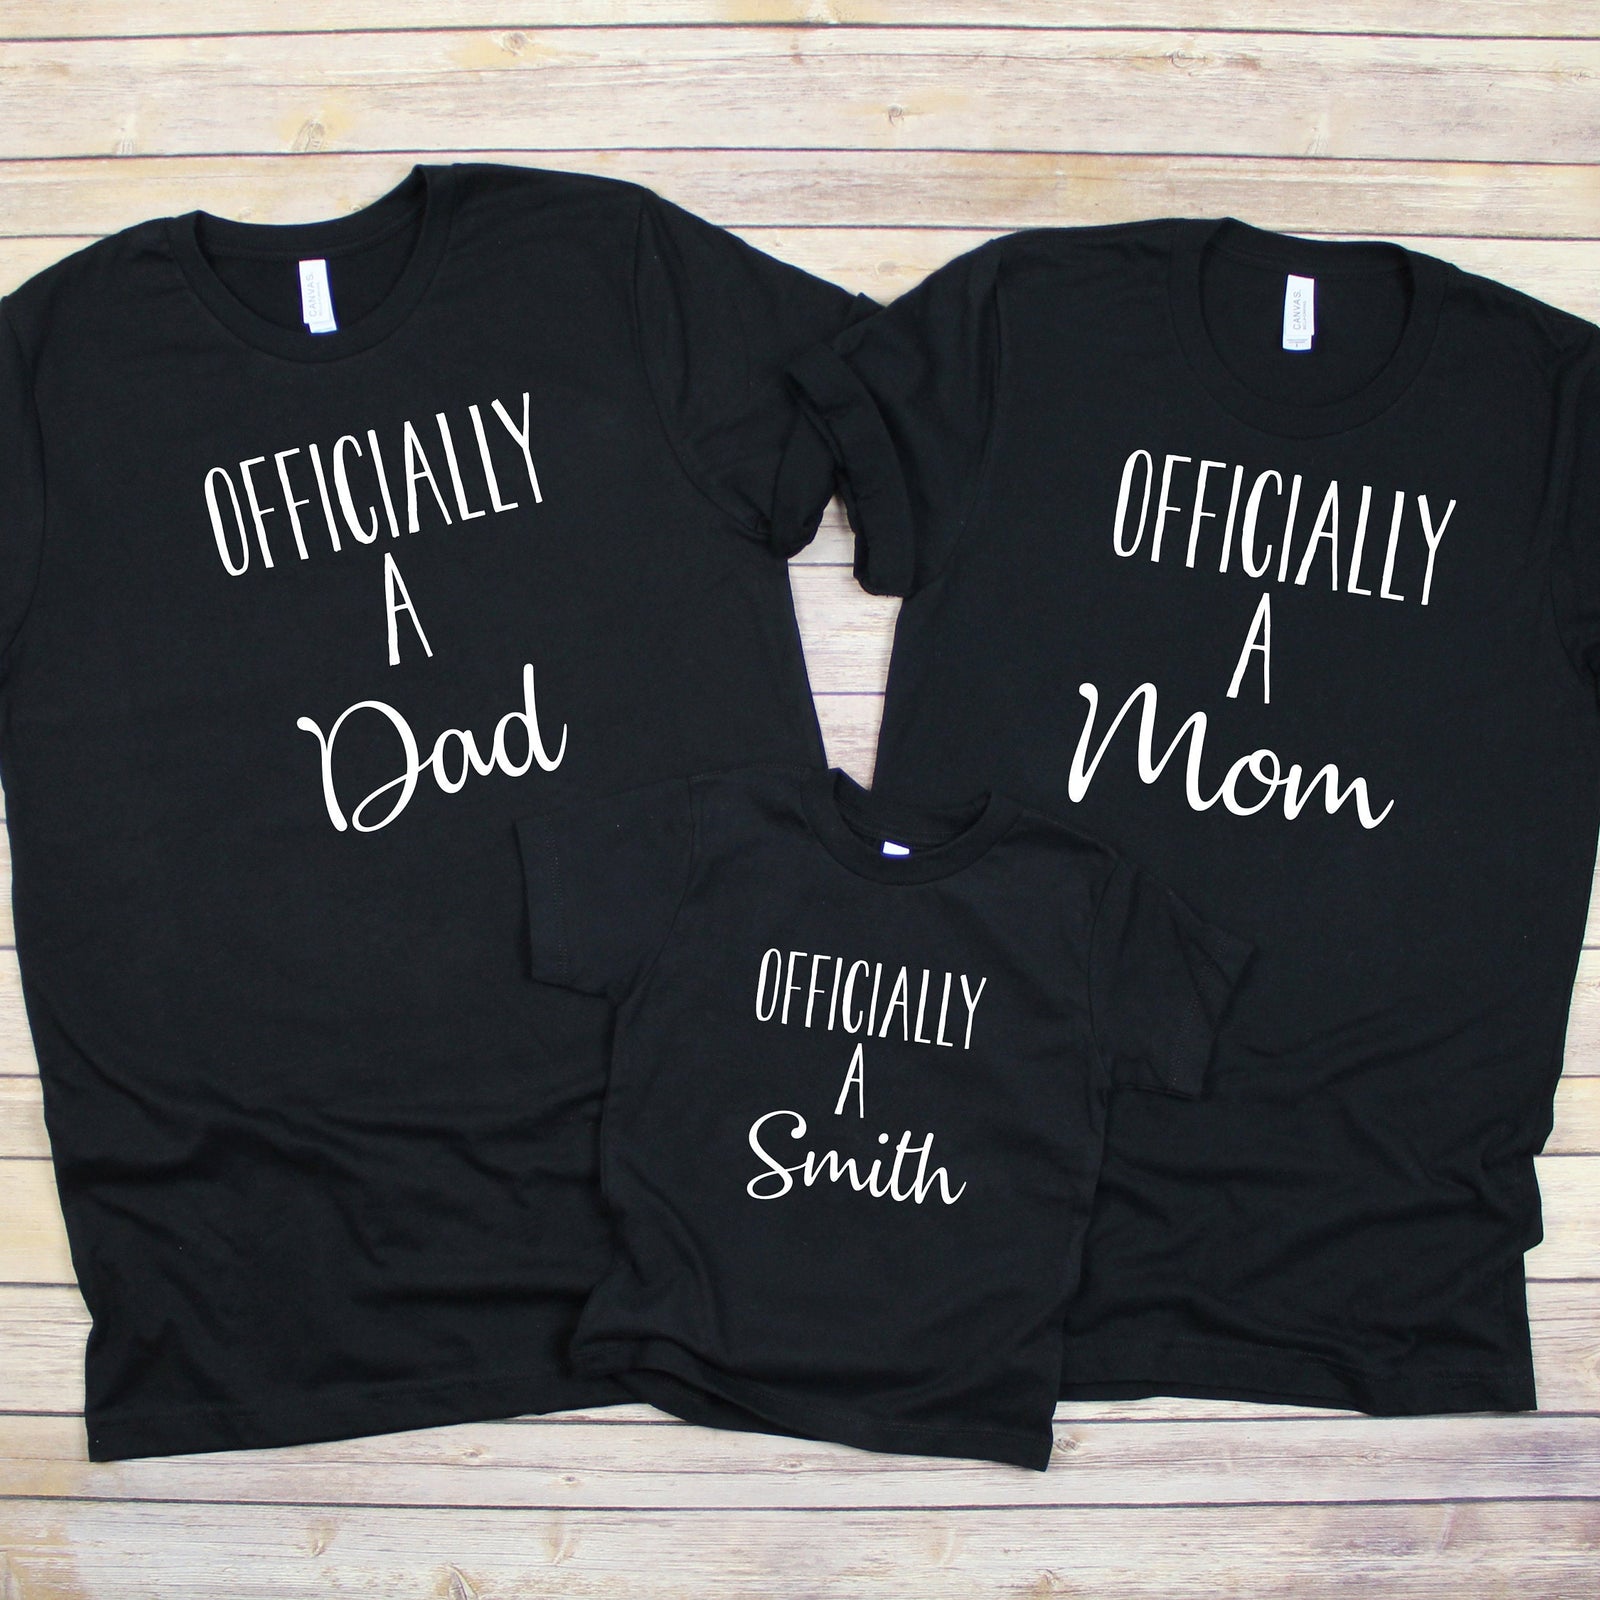 Officially a Mom - Officially a Dad - Officially Adopted - Adoption Shirts for Family with Custom Name - Gotcha Day